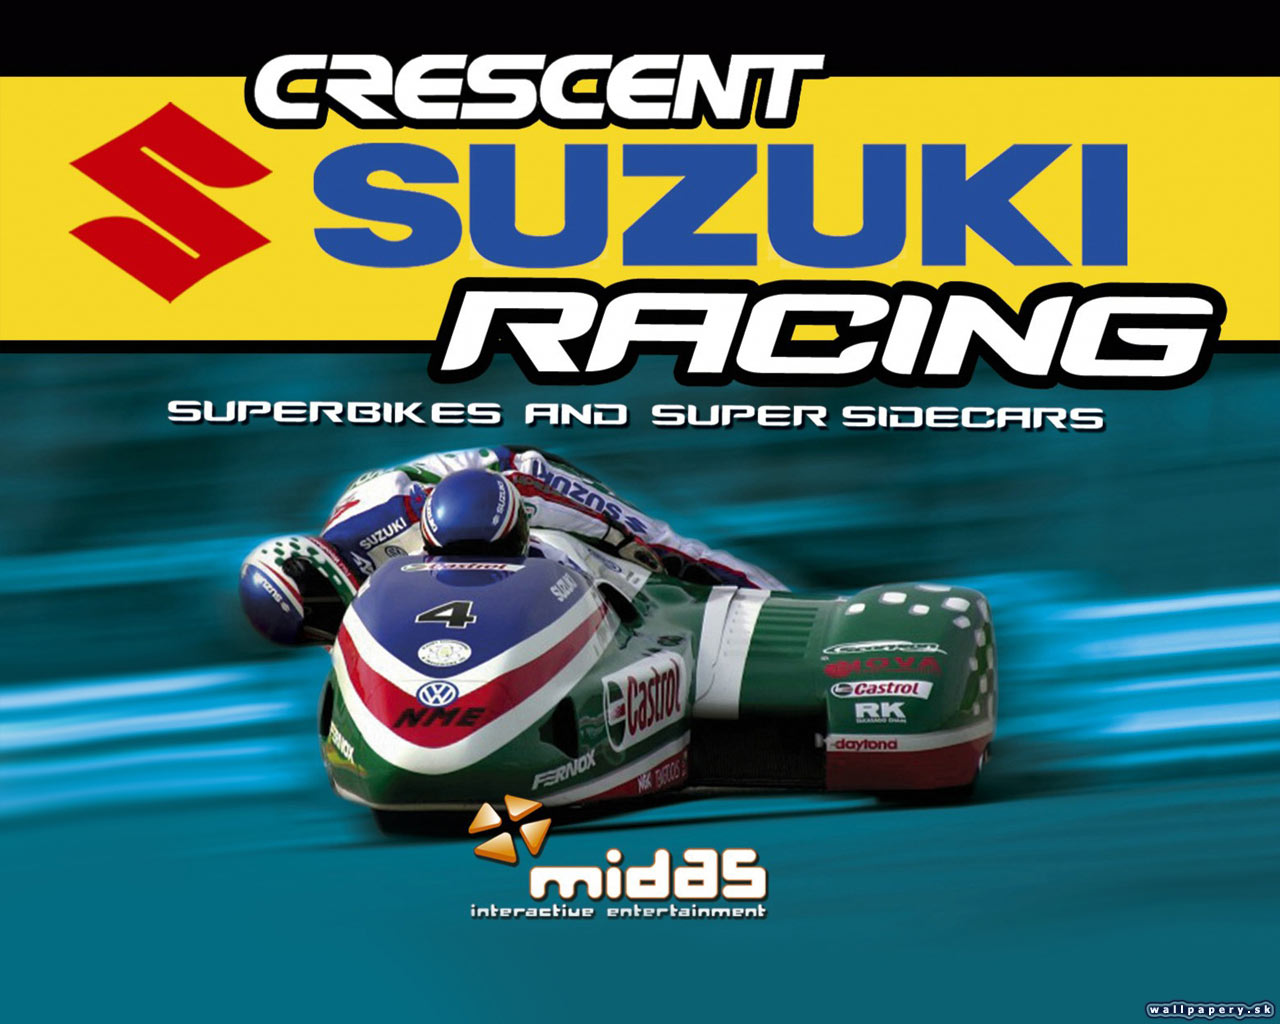 Crescent Suzuki Racing: Superbikes and Supersides - wallpaper 2